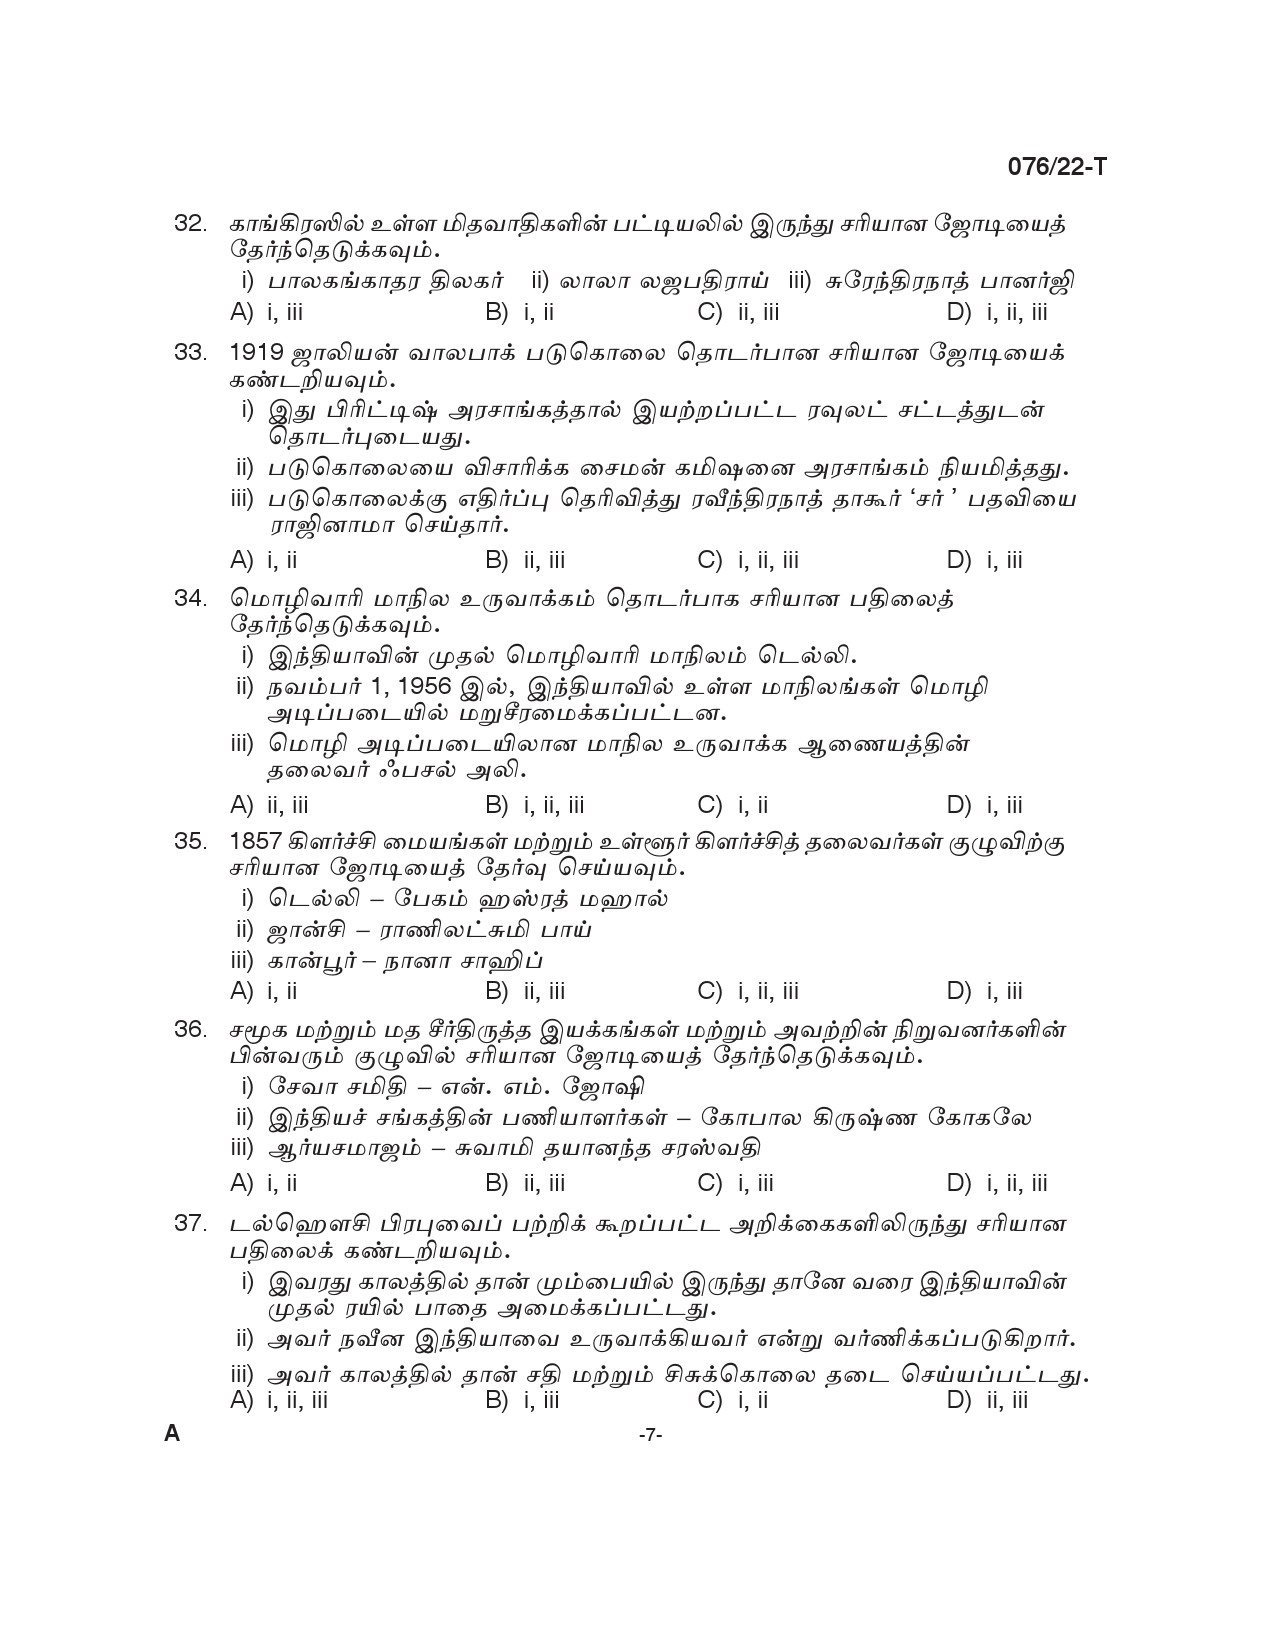 Common Preliminary Exam 2022 Upto SSLC Level Stage V Tamil 0762022 T 6